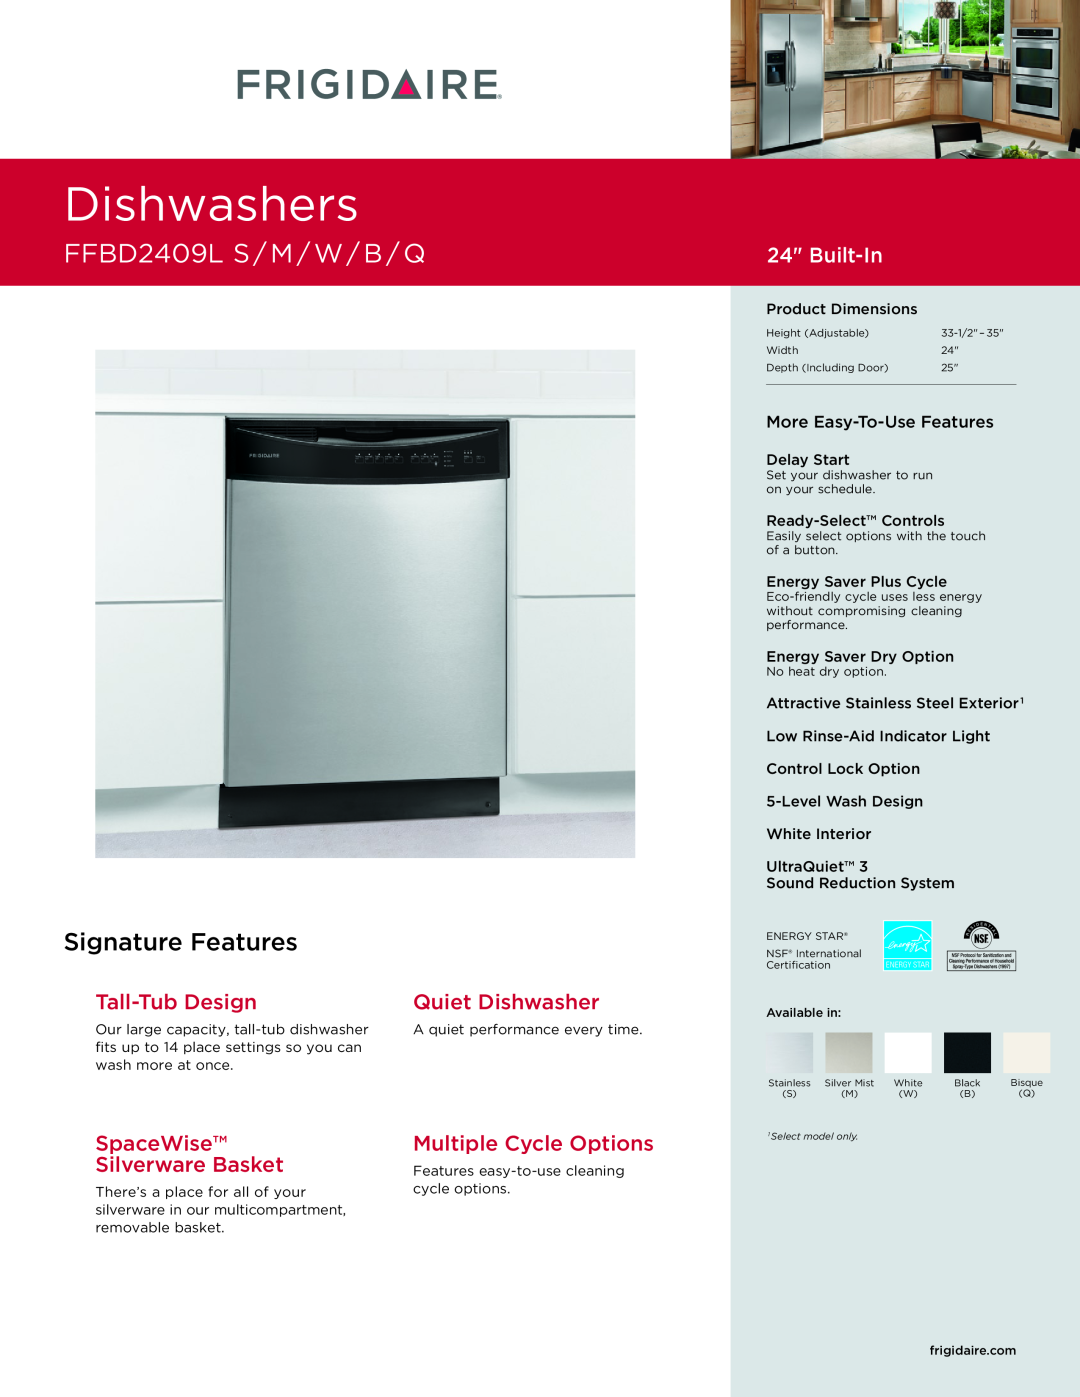 Frigidaire dimensions Dishwashersrop-InCooktop, FFBD2409LPEC3085K S/ M / W / B / Q, Signature Features, Tall-TubDesign 